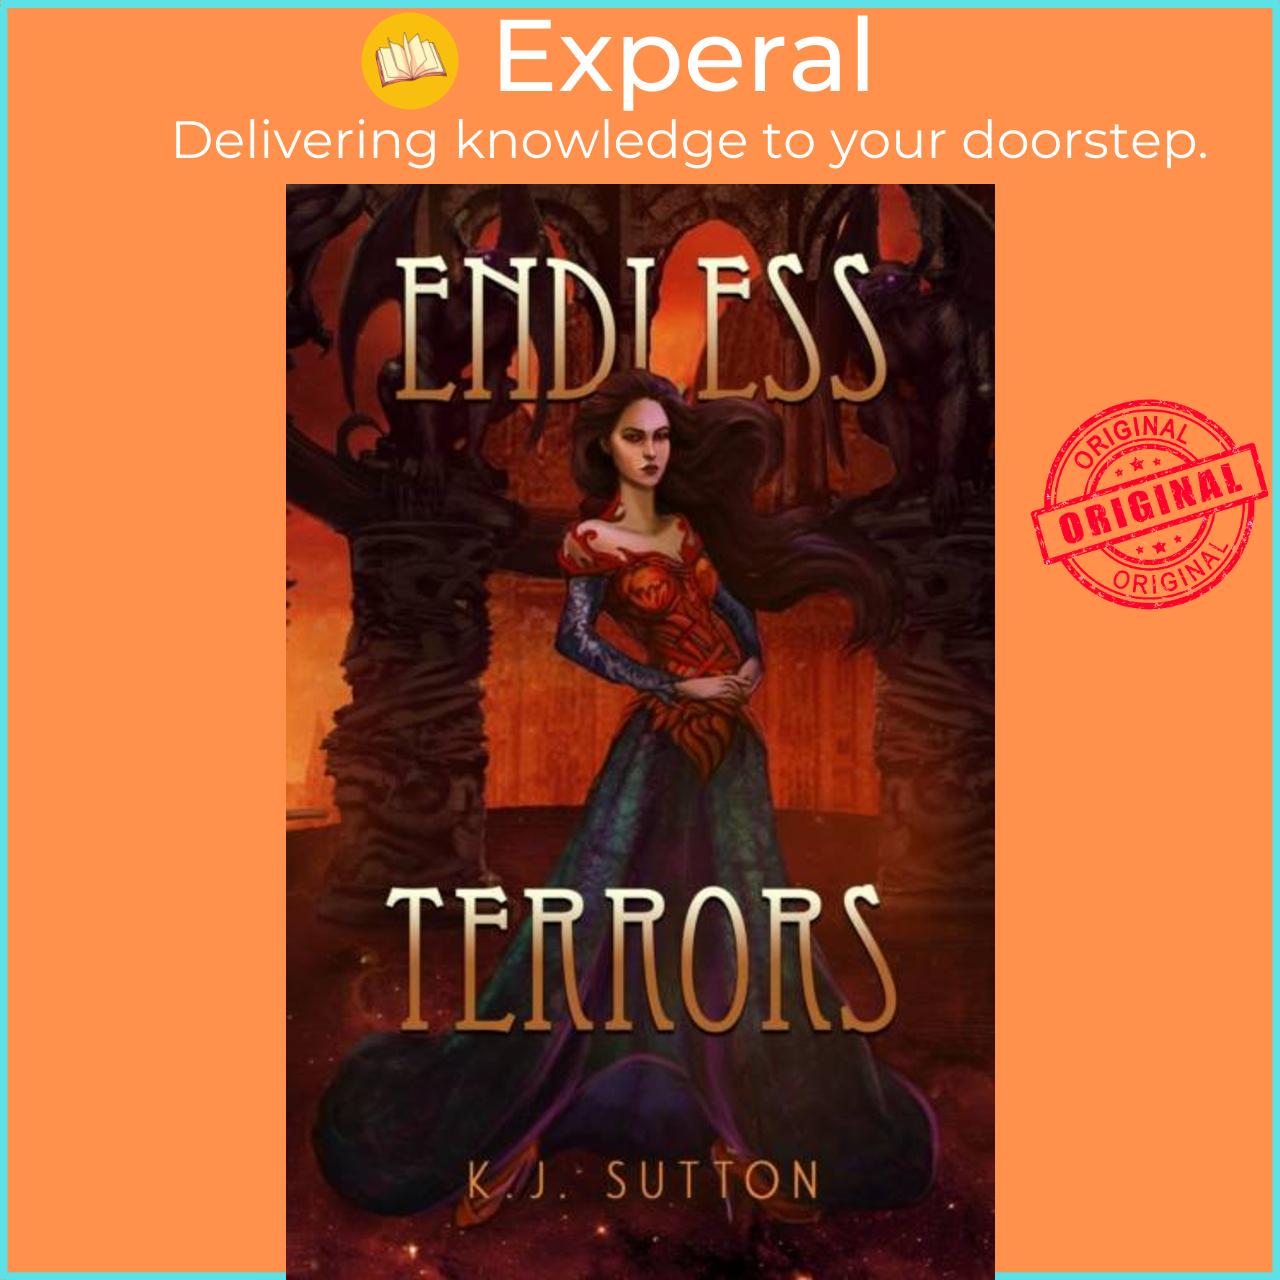 Sách - Endless Terrors by K.J. Sutton (UK edition, paperback)